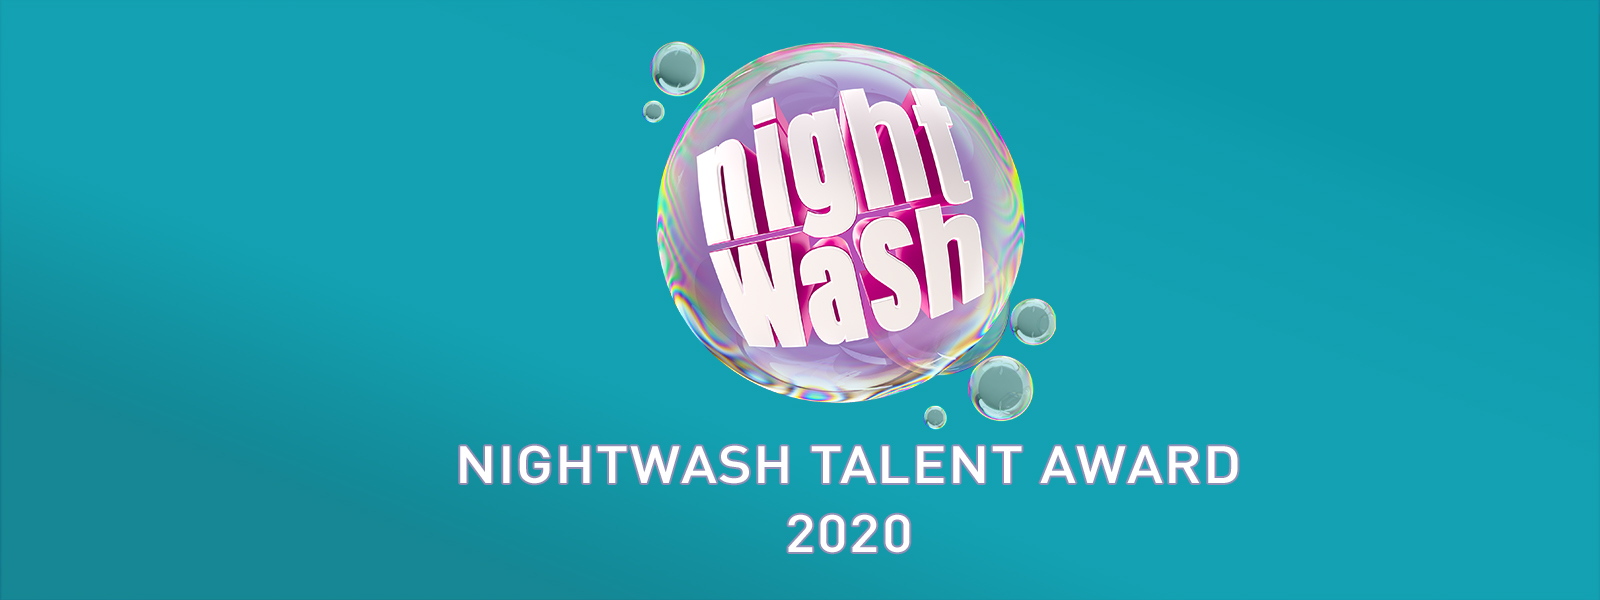 NightWash Talent Award 2020